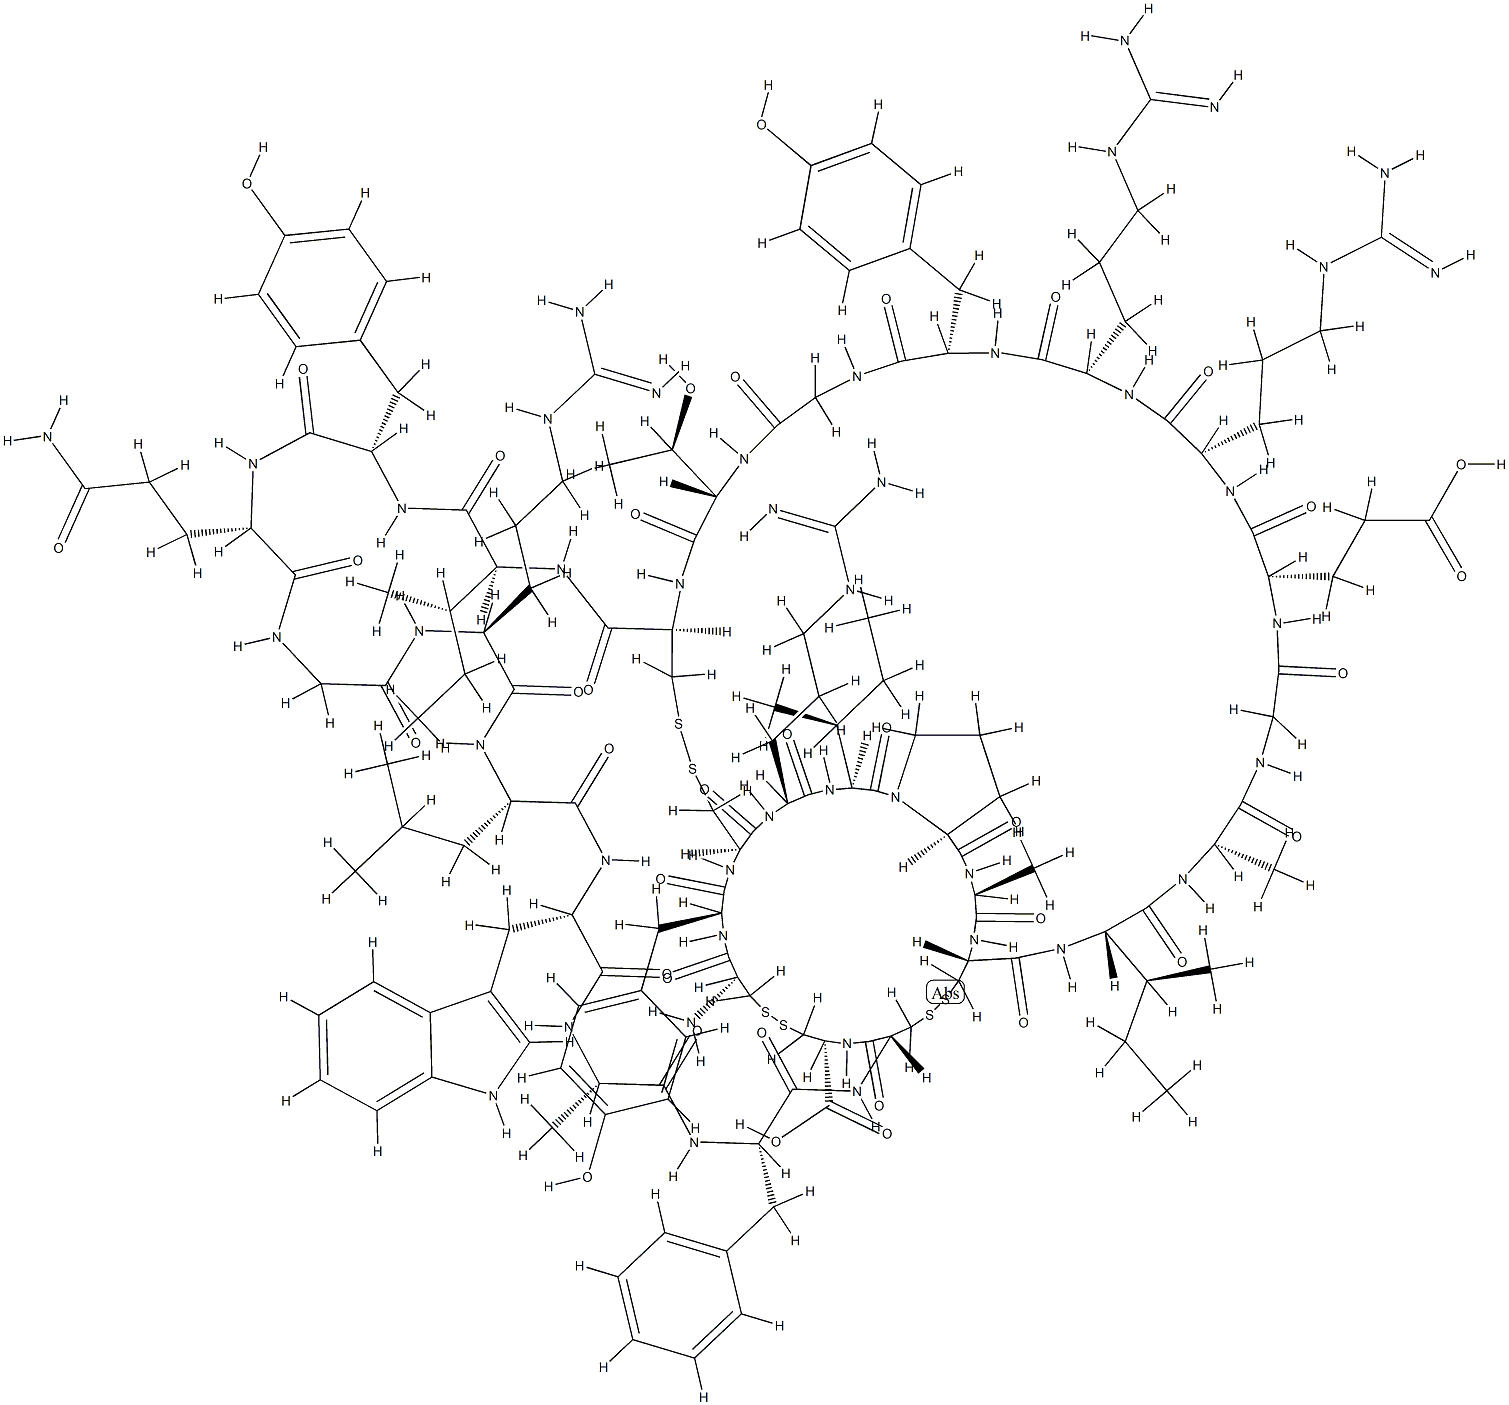 DEFENSIN HNP-2 (HUMAN) Structure